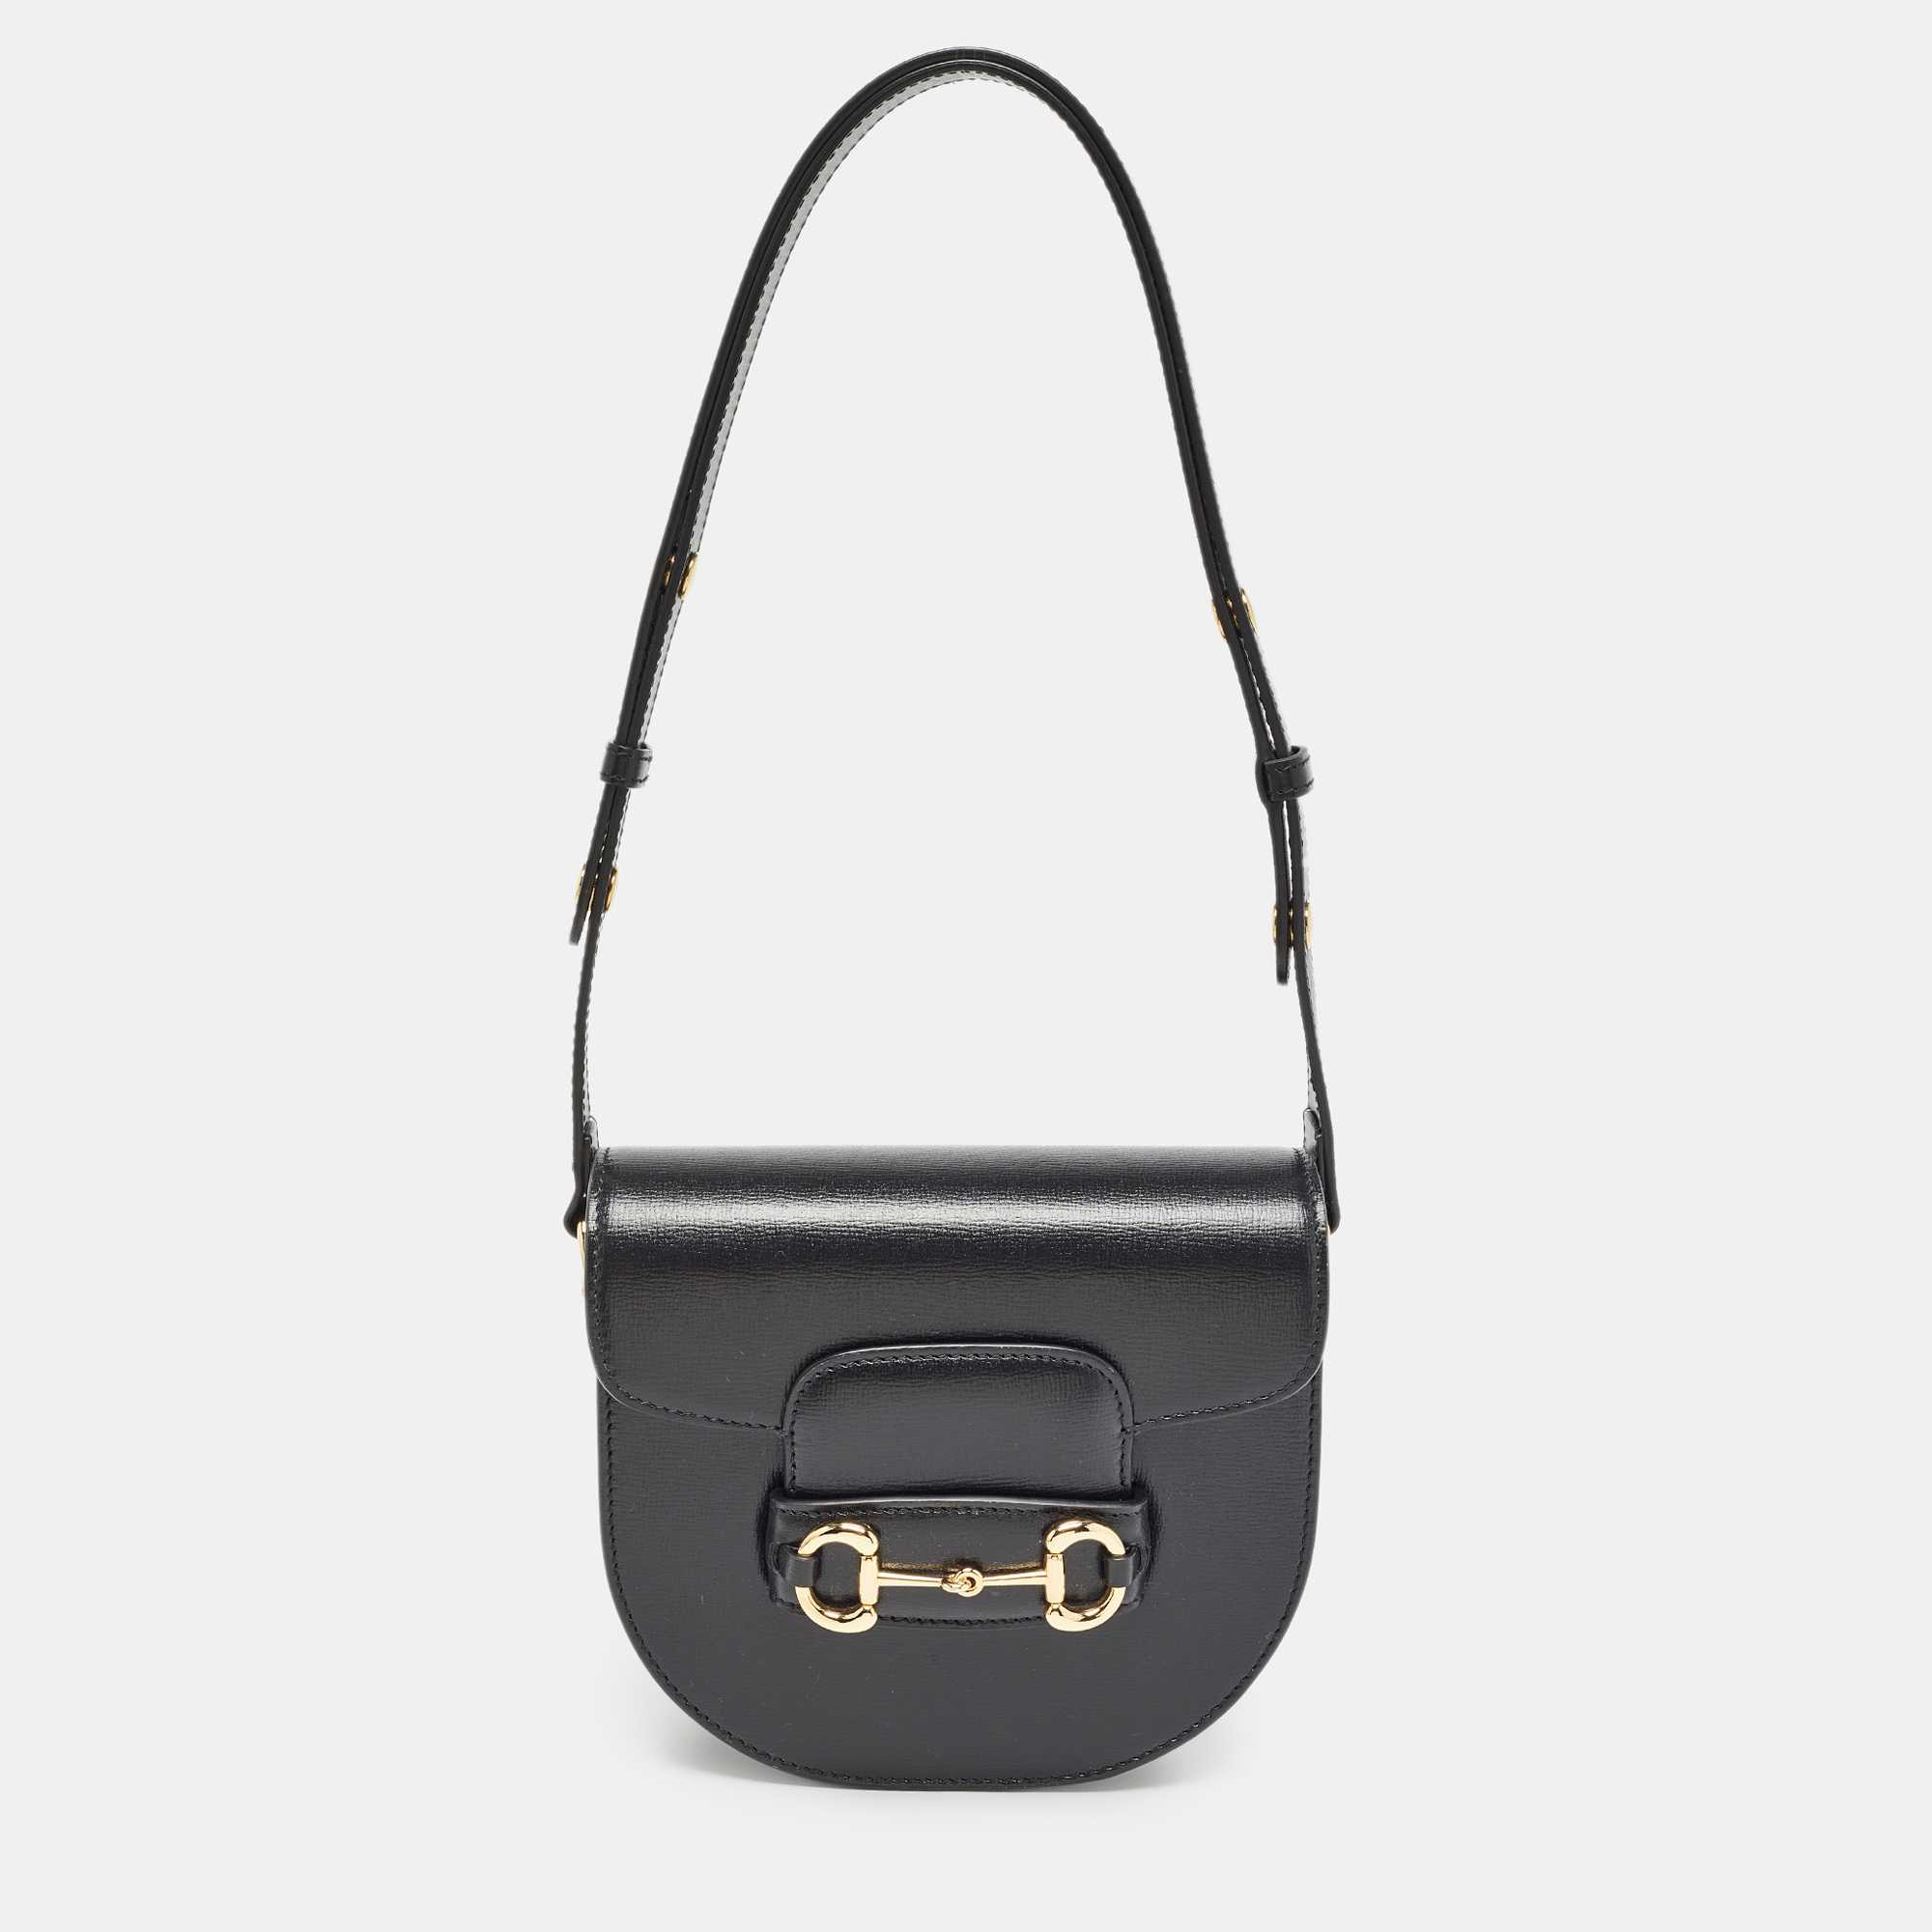 Gucci black leather mini horsebit 1955 rounded bag